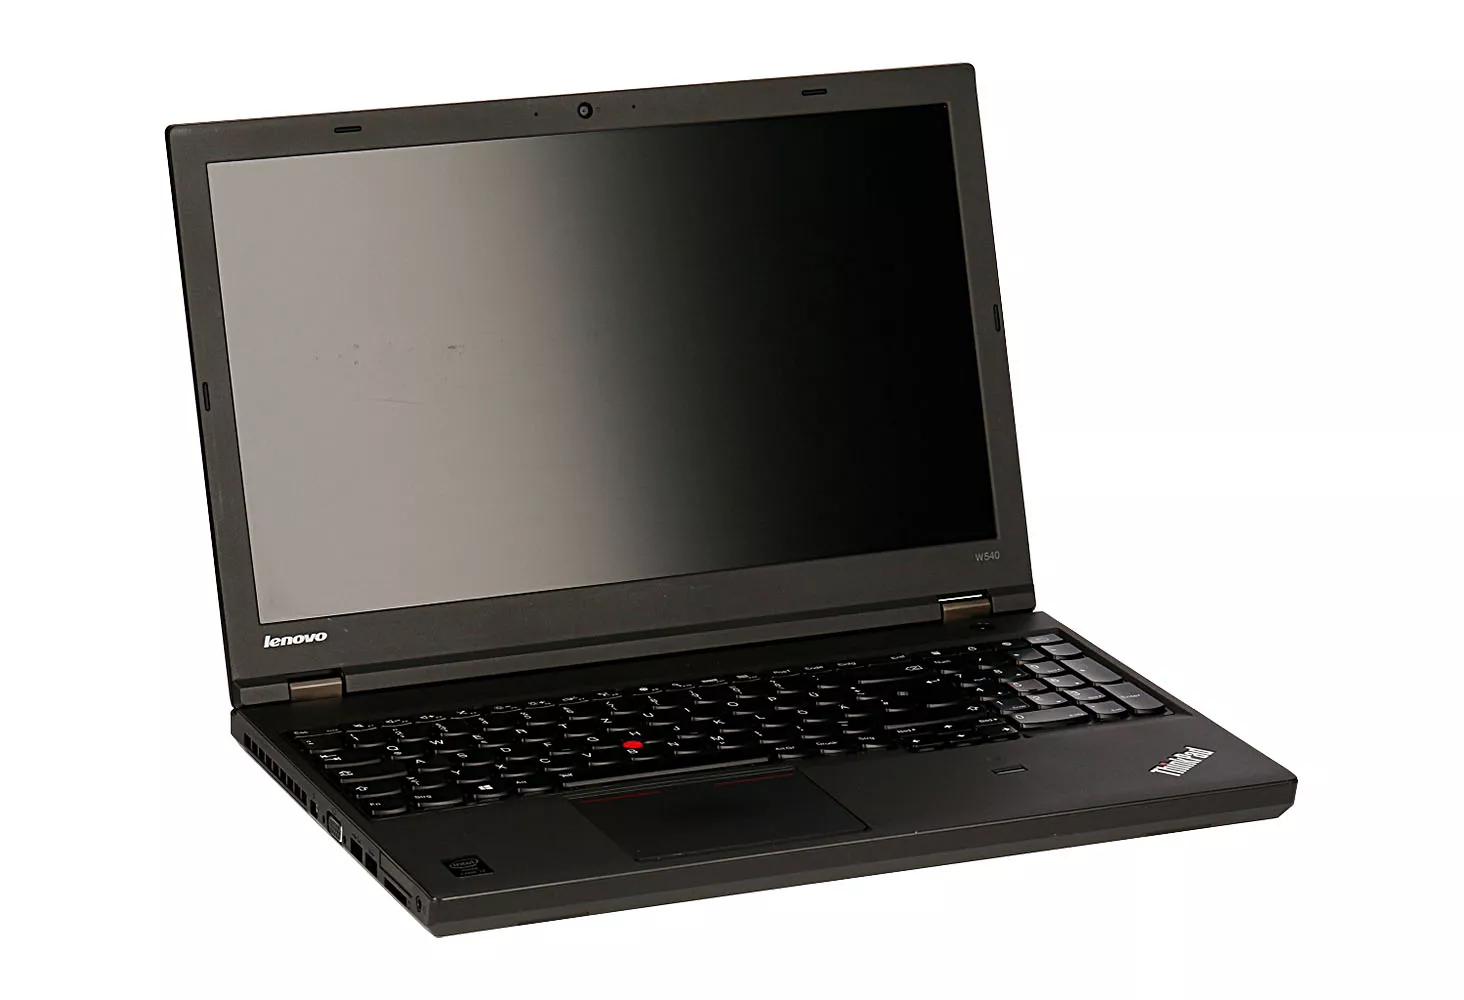 Lenovo ThinkPad W541 Quad Core i7 4810QM 2,8 GHz Webcam B-Ware